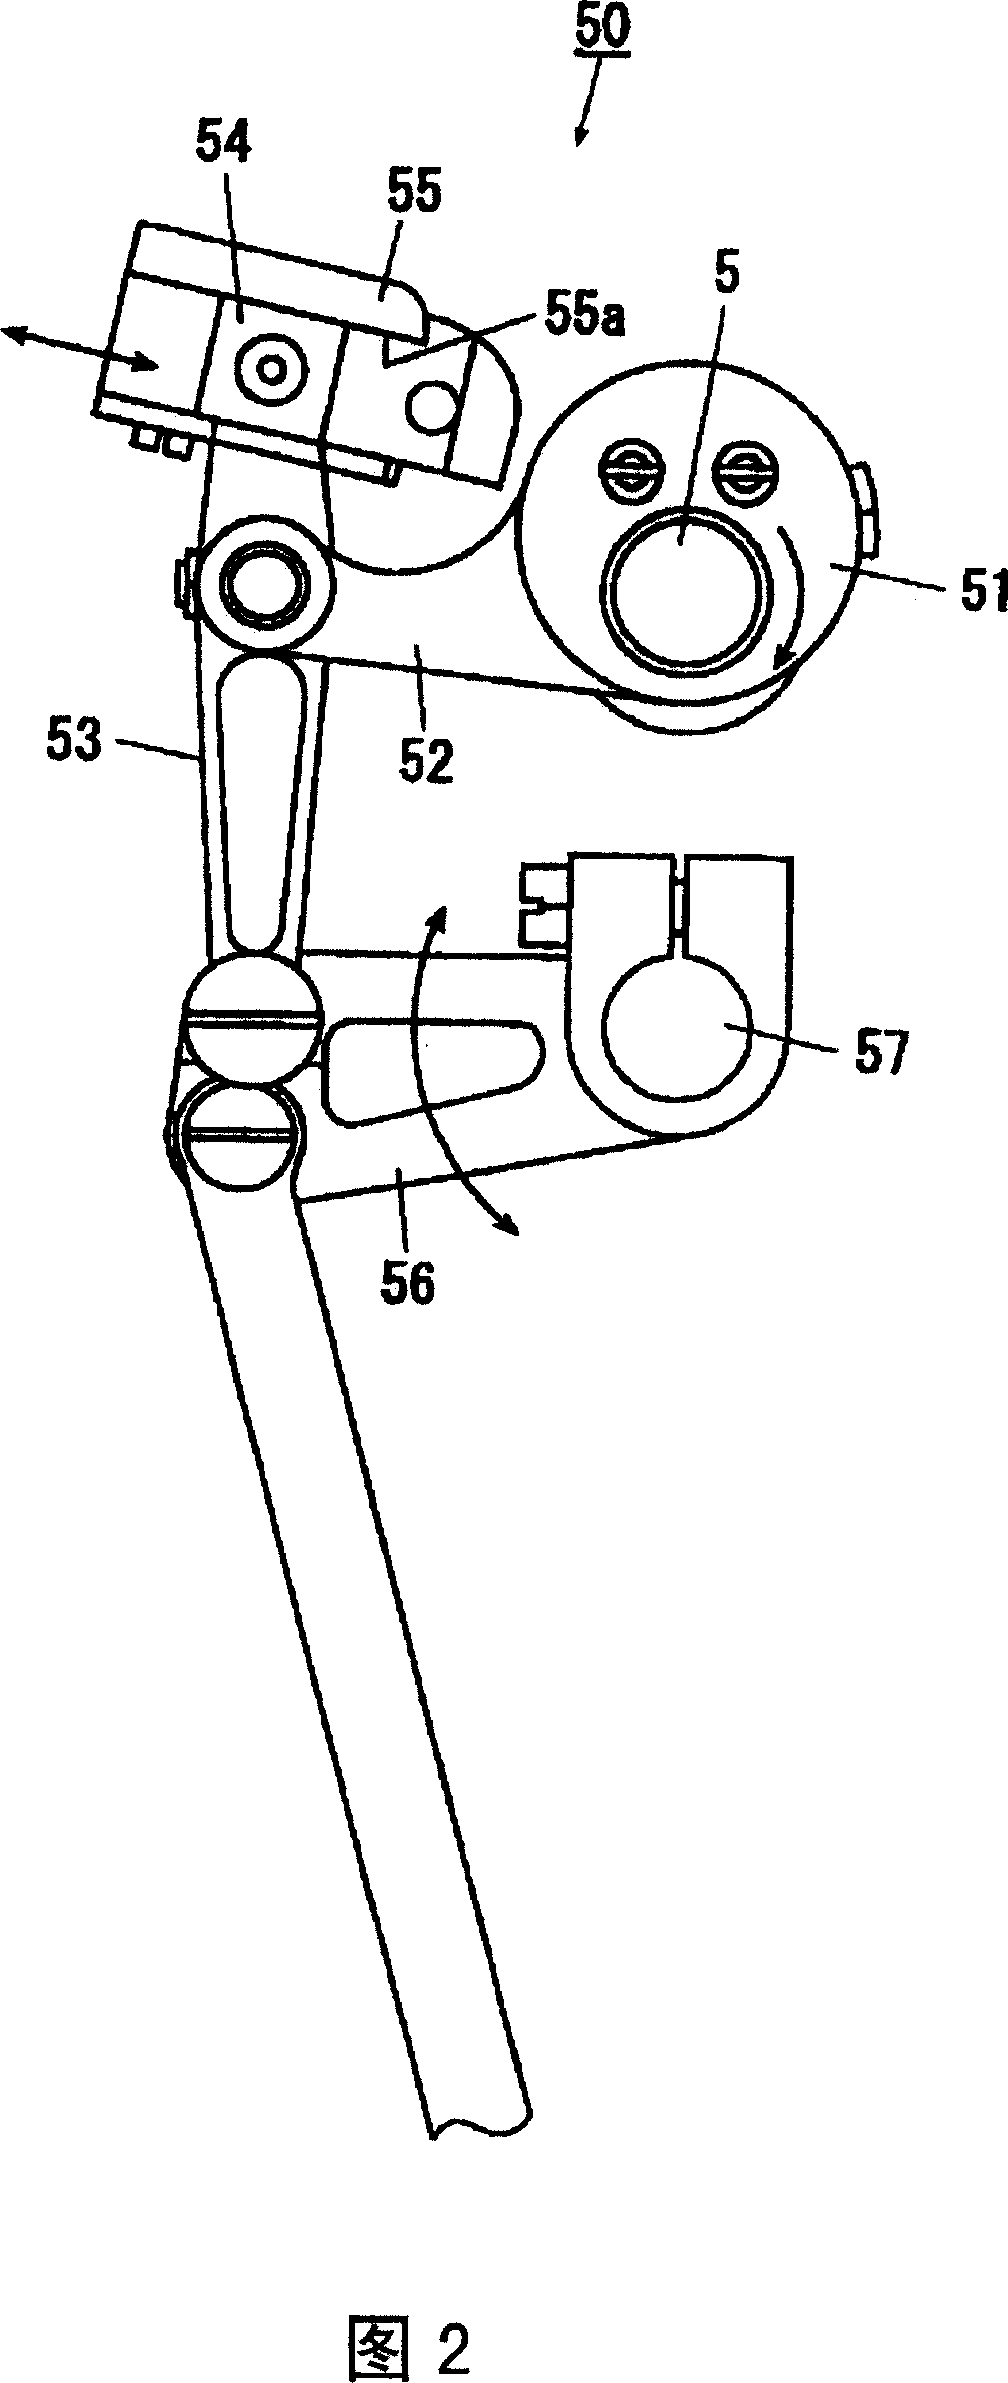 Cloth-feeding device of sewing machine